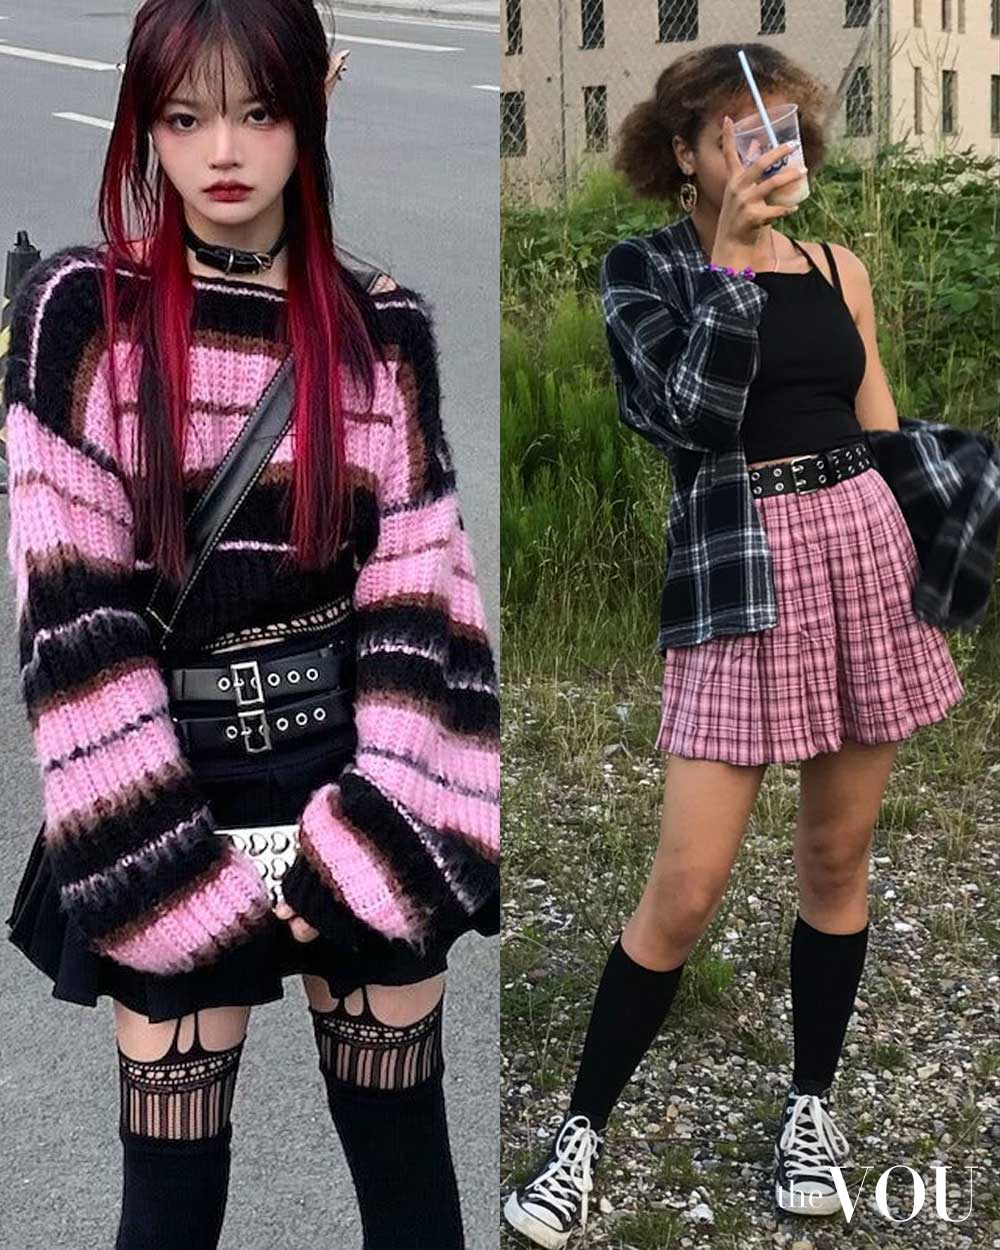 Dual kawaii outfit inspiration - cropped sweatshirt, miniskirt, stockings, belts